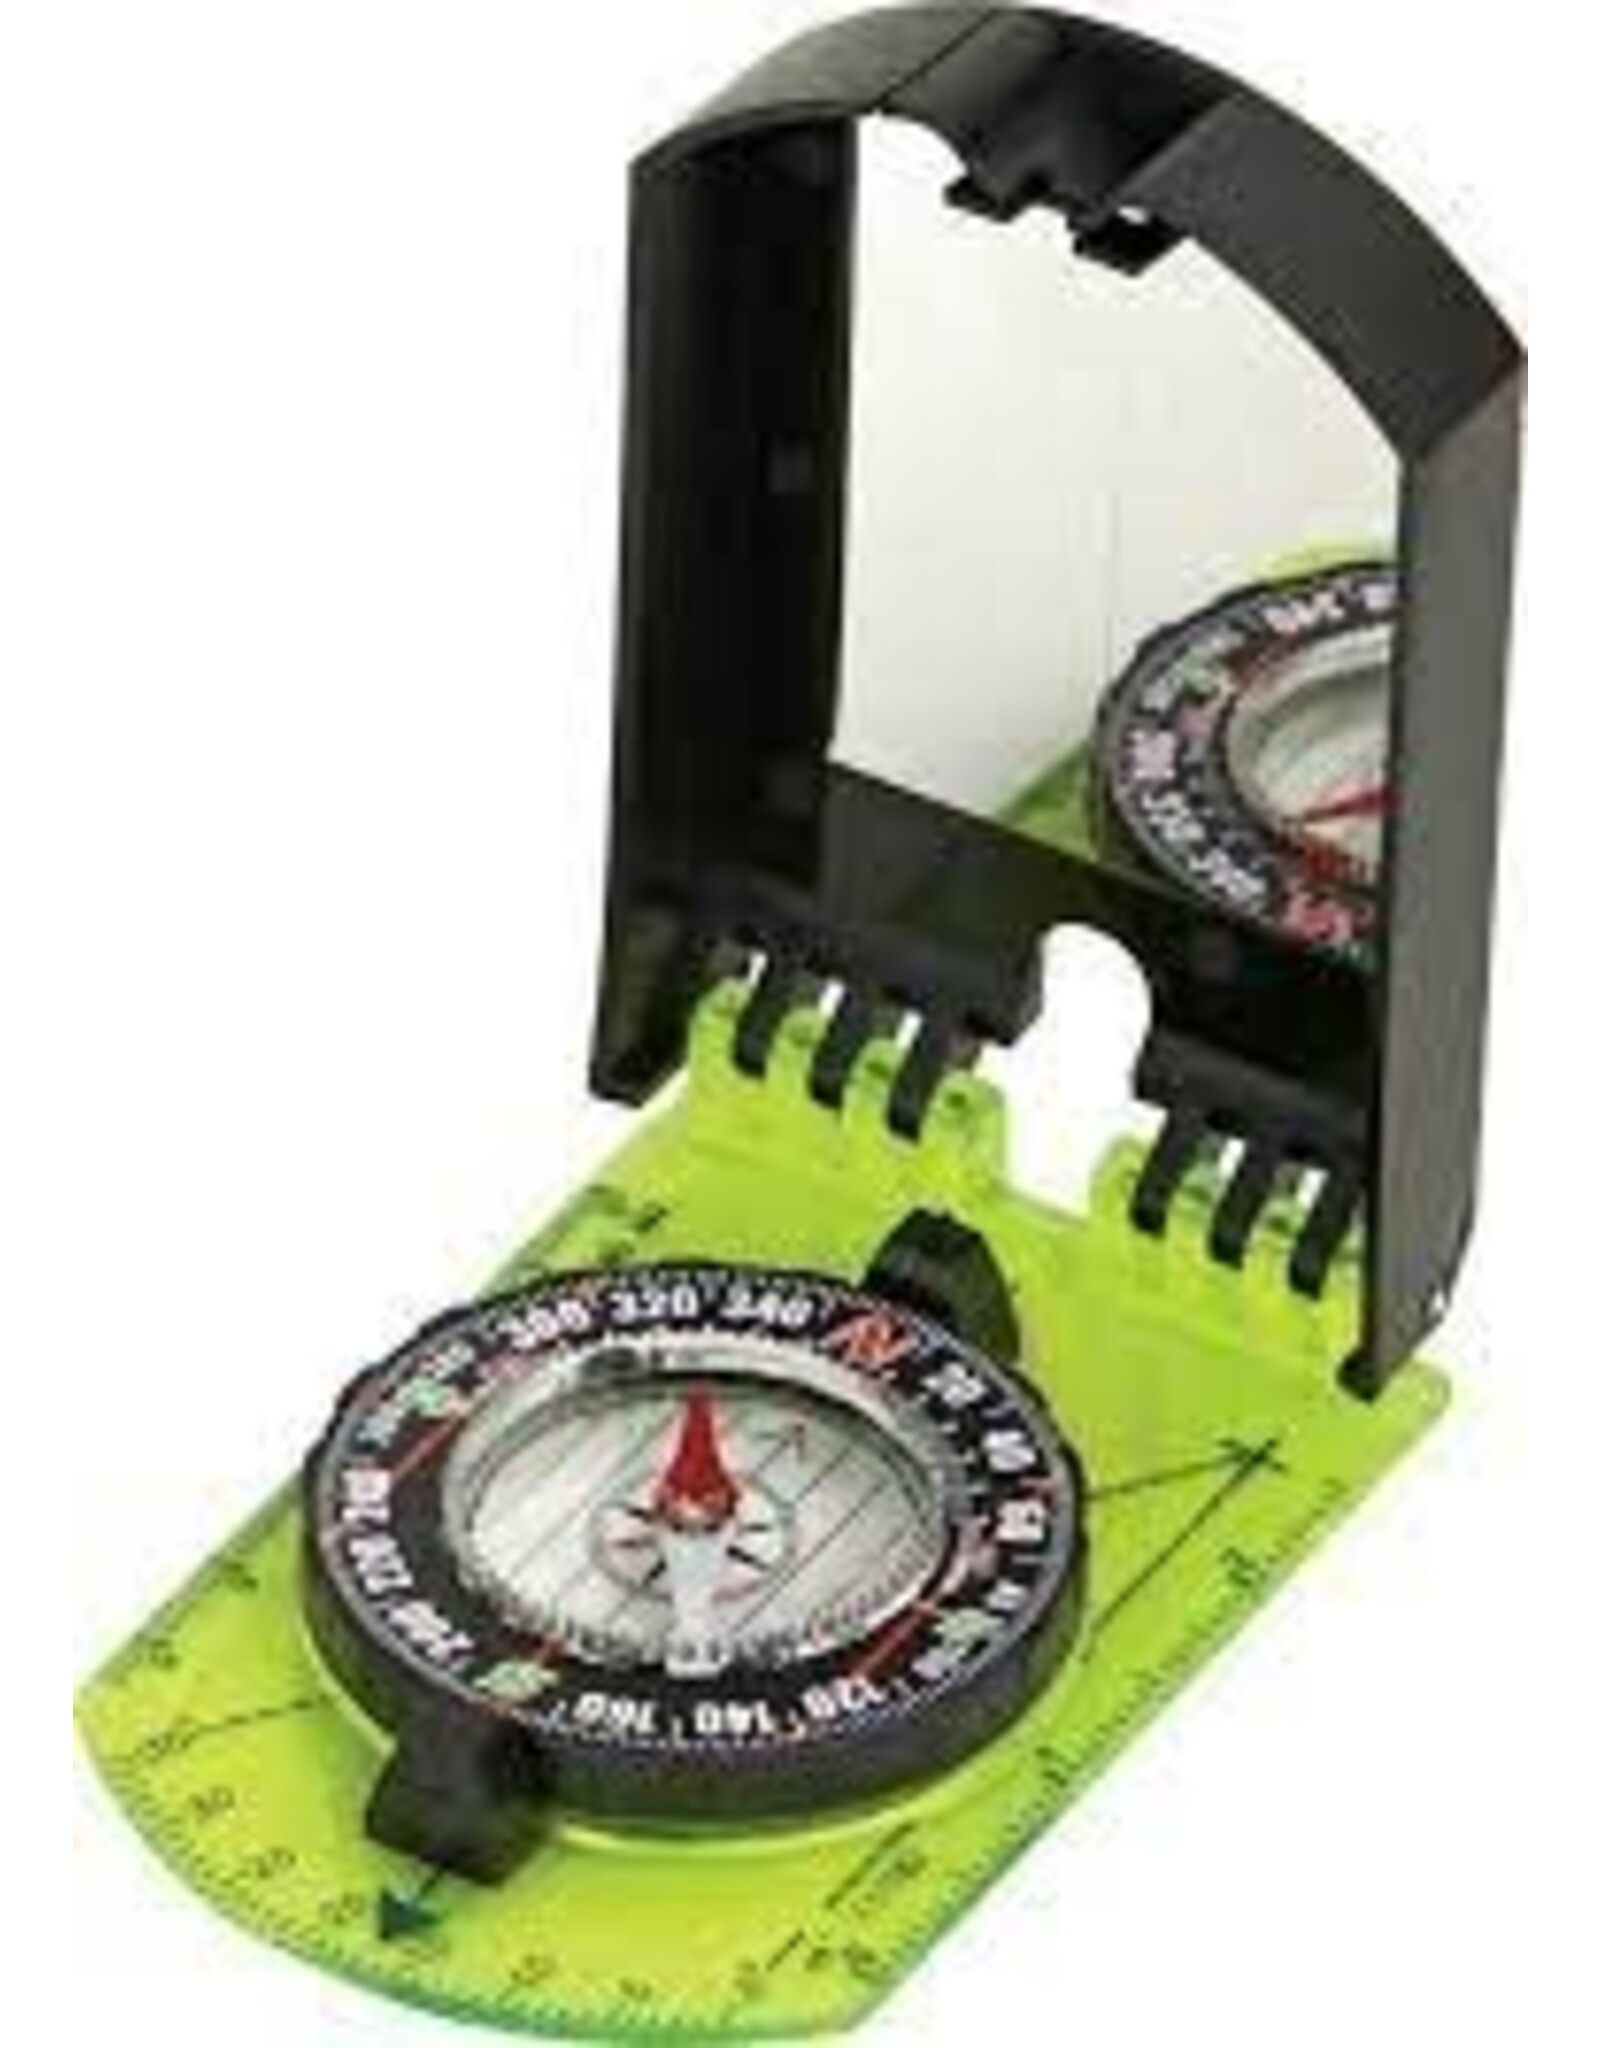 Explorer Compass 51 Folding Compass With Black Composition & Green Acrylic Construction